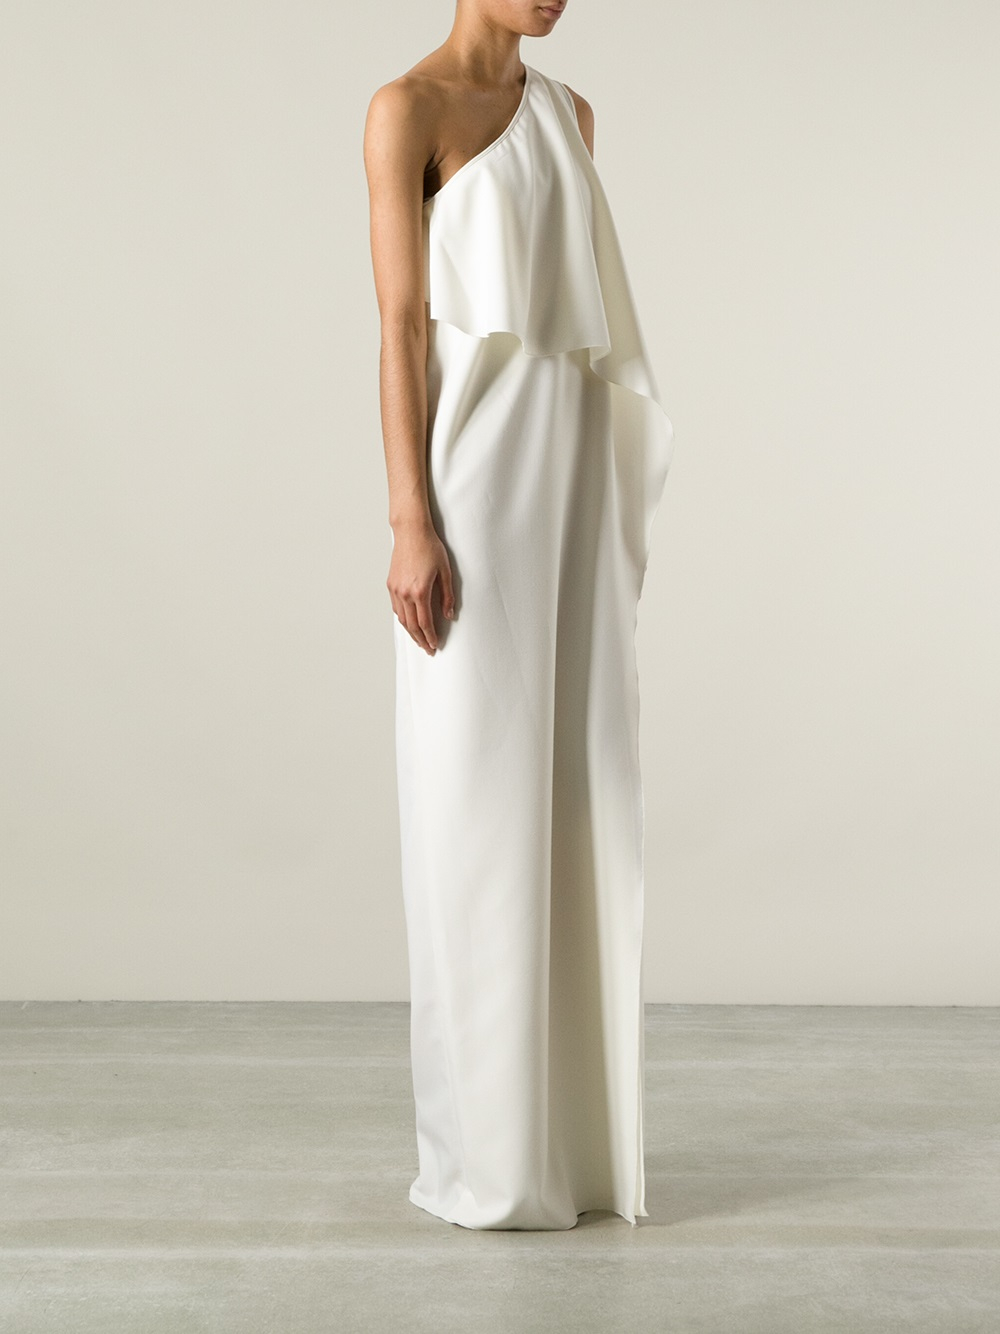 Amen Asymmetrical Gown in White - Lyst